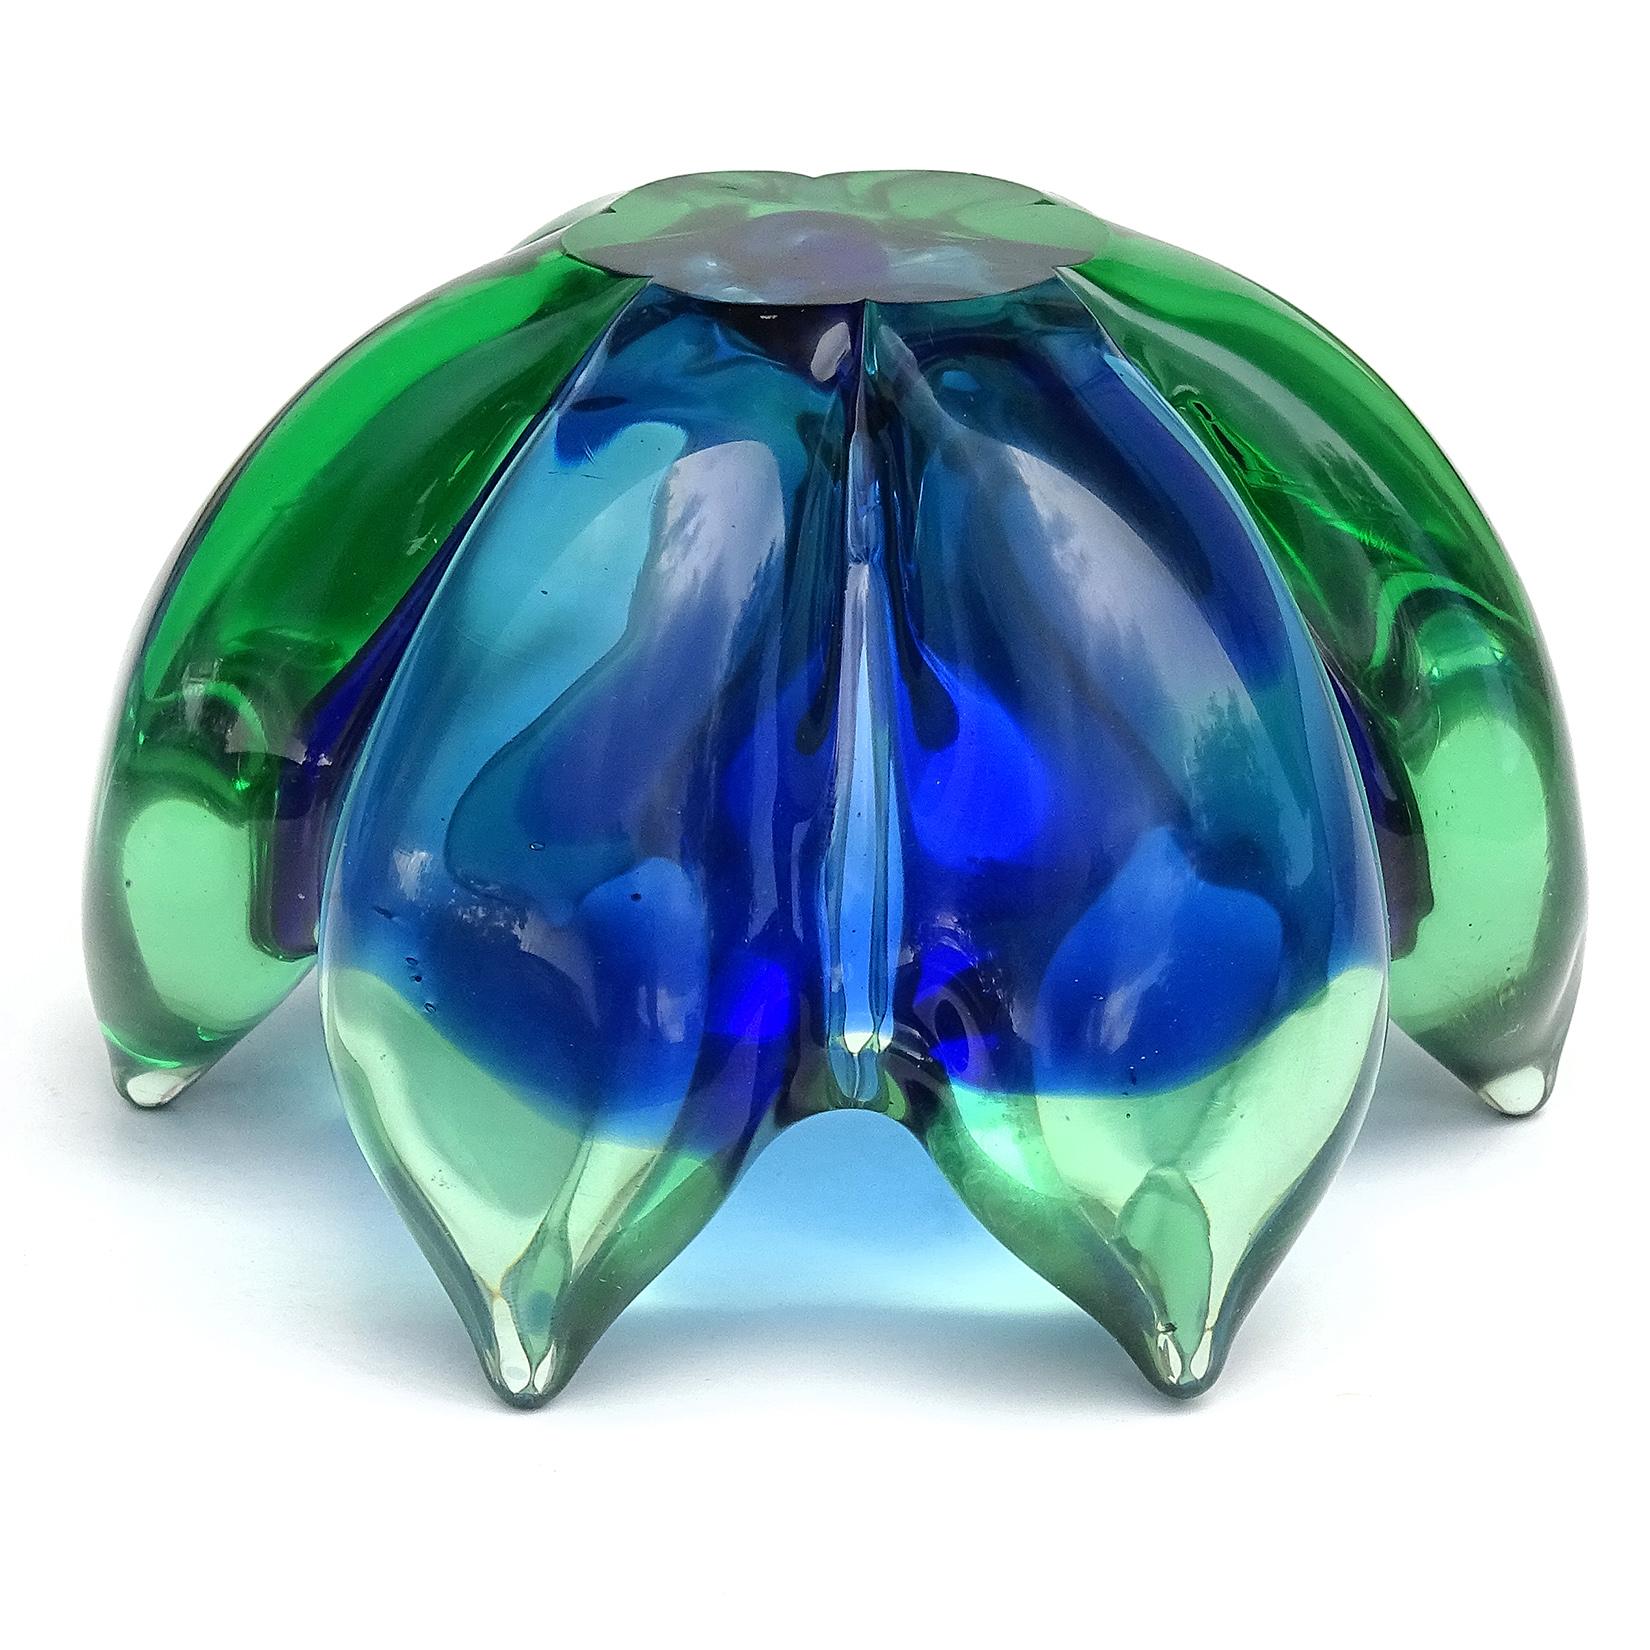 Seguso Murano Sommerso Blue Green Italian Art Glass Lotus Flower Bowl Dish For Sale 1